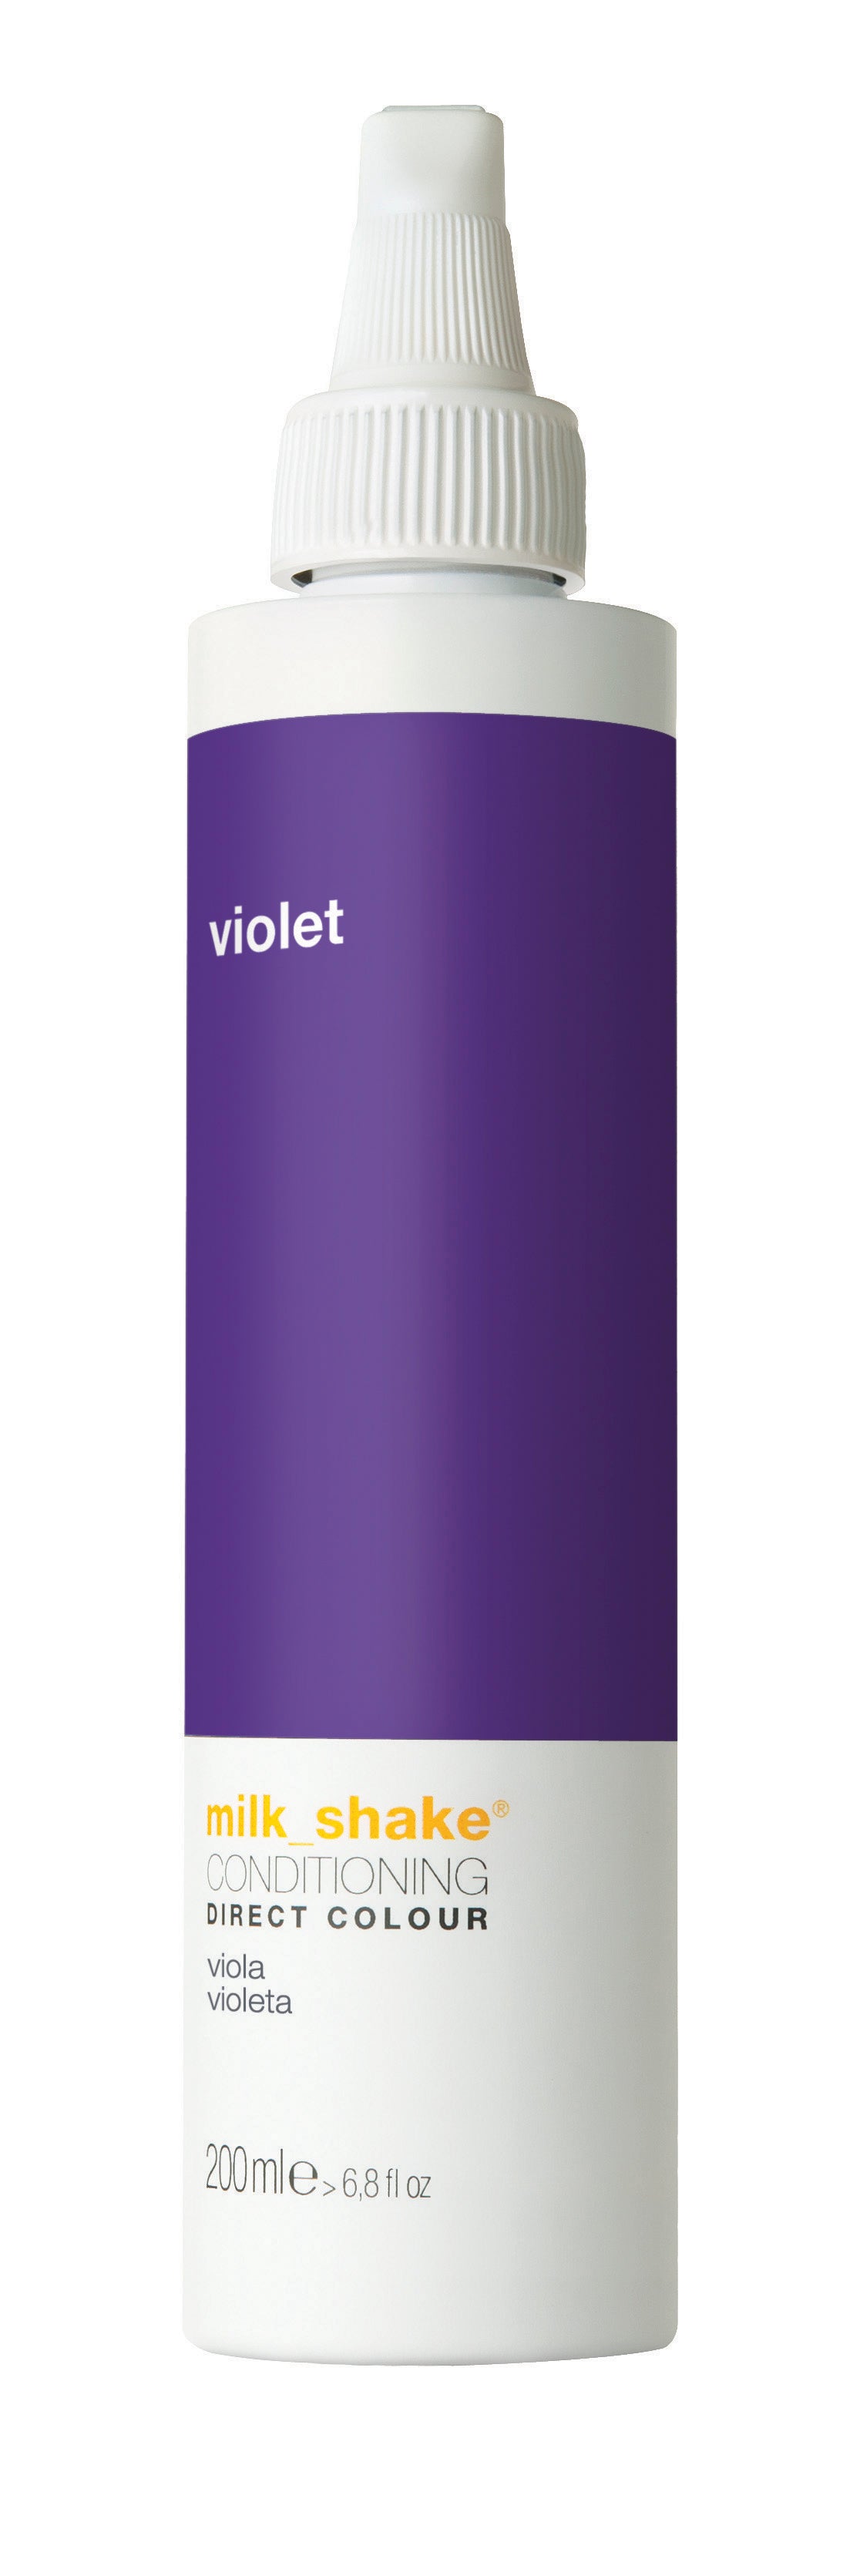 Milk Shake Conditioning Direct Colour Haartönung 200 ml / Violet